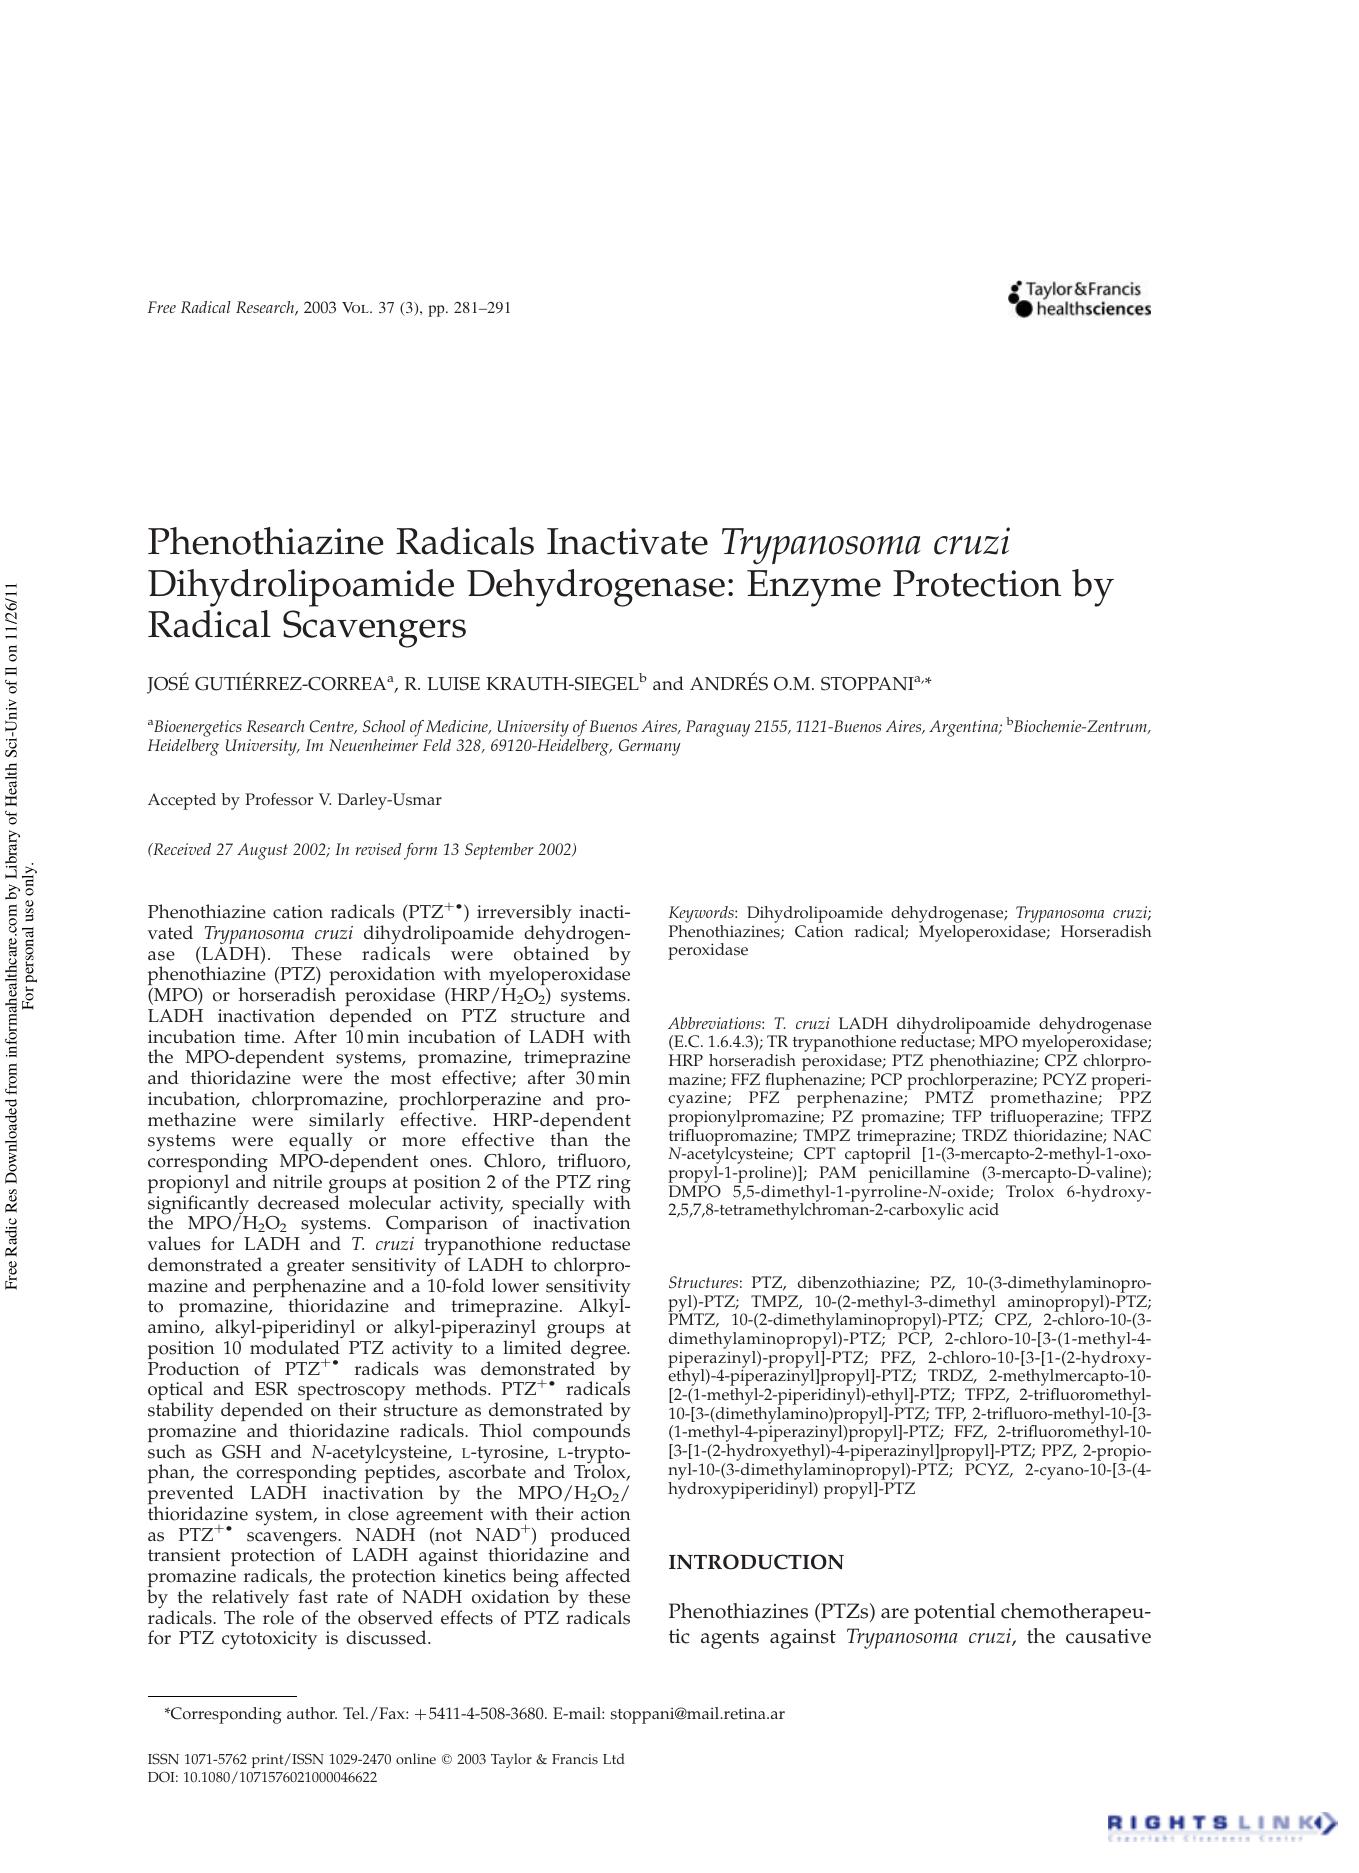 Phenothiazine Radicals Inactivate Trypanosoma cruzi Dihydrolipoamide Dehydrogenase: Enzyme Protection by Radical Scavengers by José Gutiérrez-Correa1 R. Luise Krauth-Siegel2 & Andrés O.M. Stoppani1